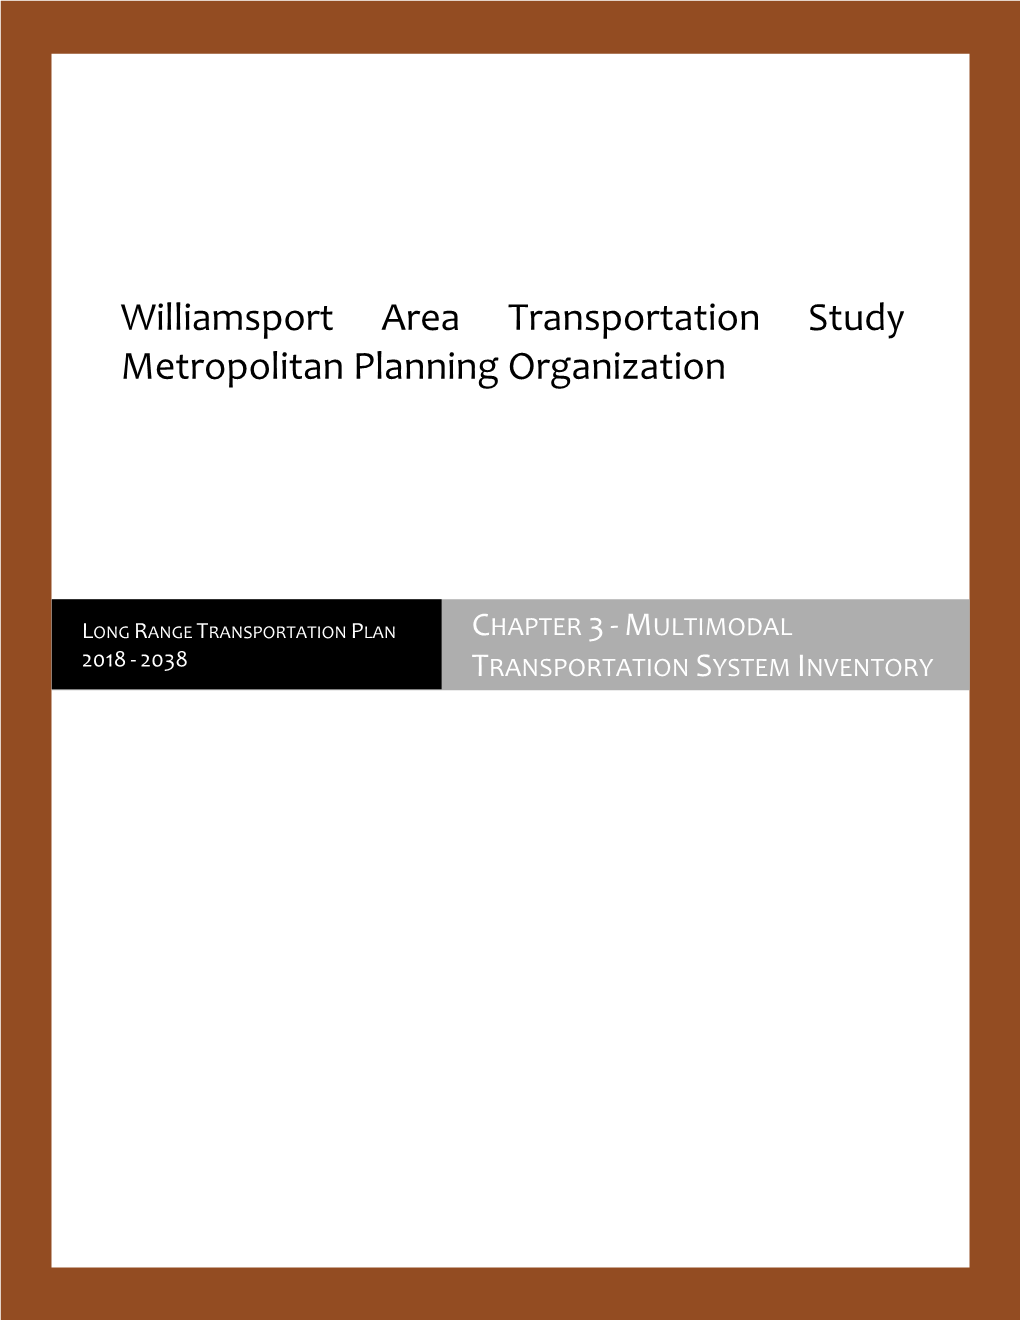 Chapter 3 - Multimodal 2018 - 2038 Transportation System Inventory